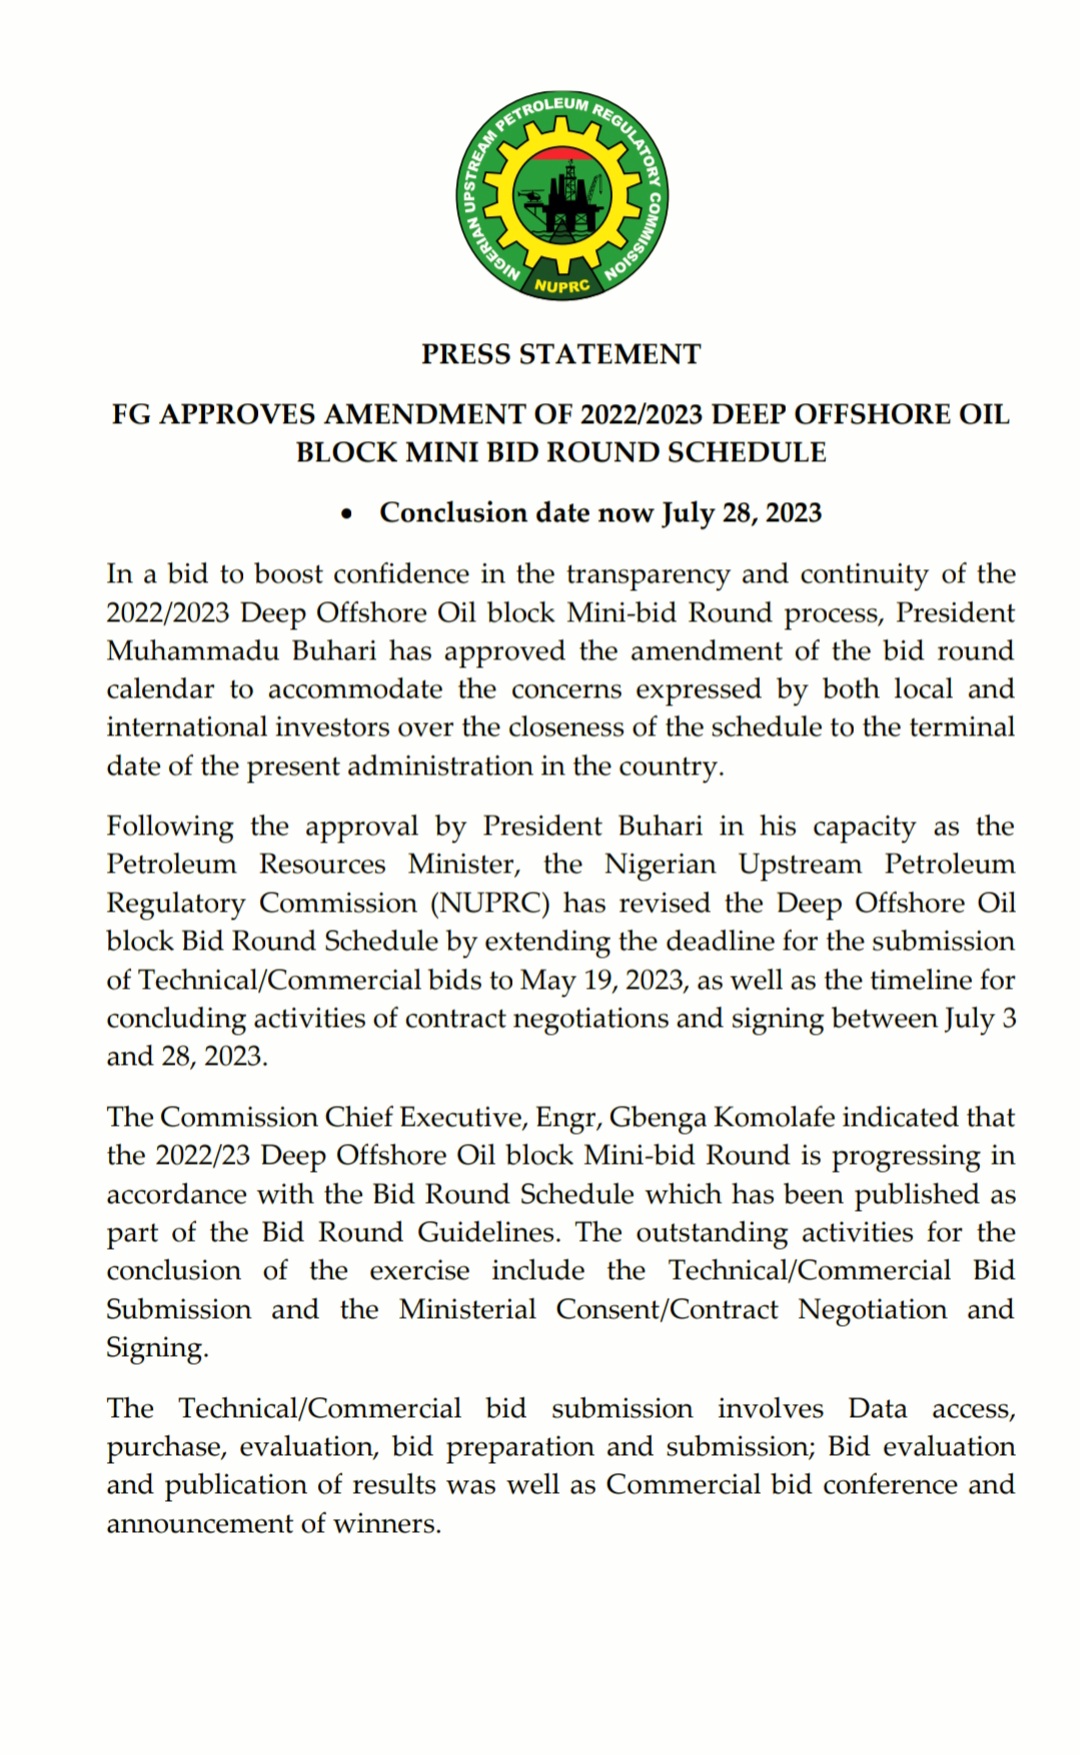 Press Statement – FG Approves Amendment of 2022/2023 Deep Offshore Oil Block Mini Bid Round Schedule